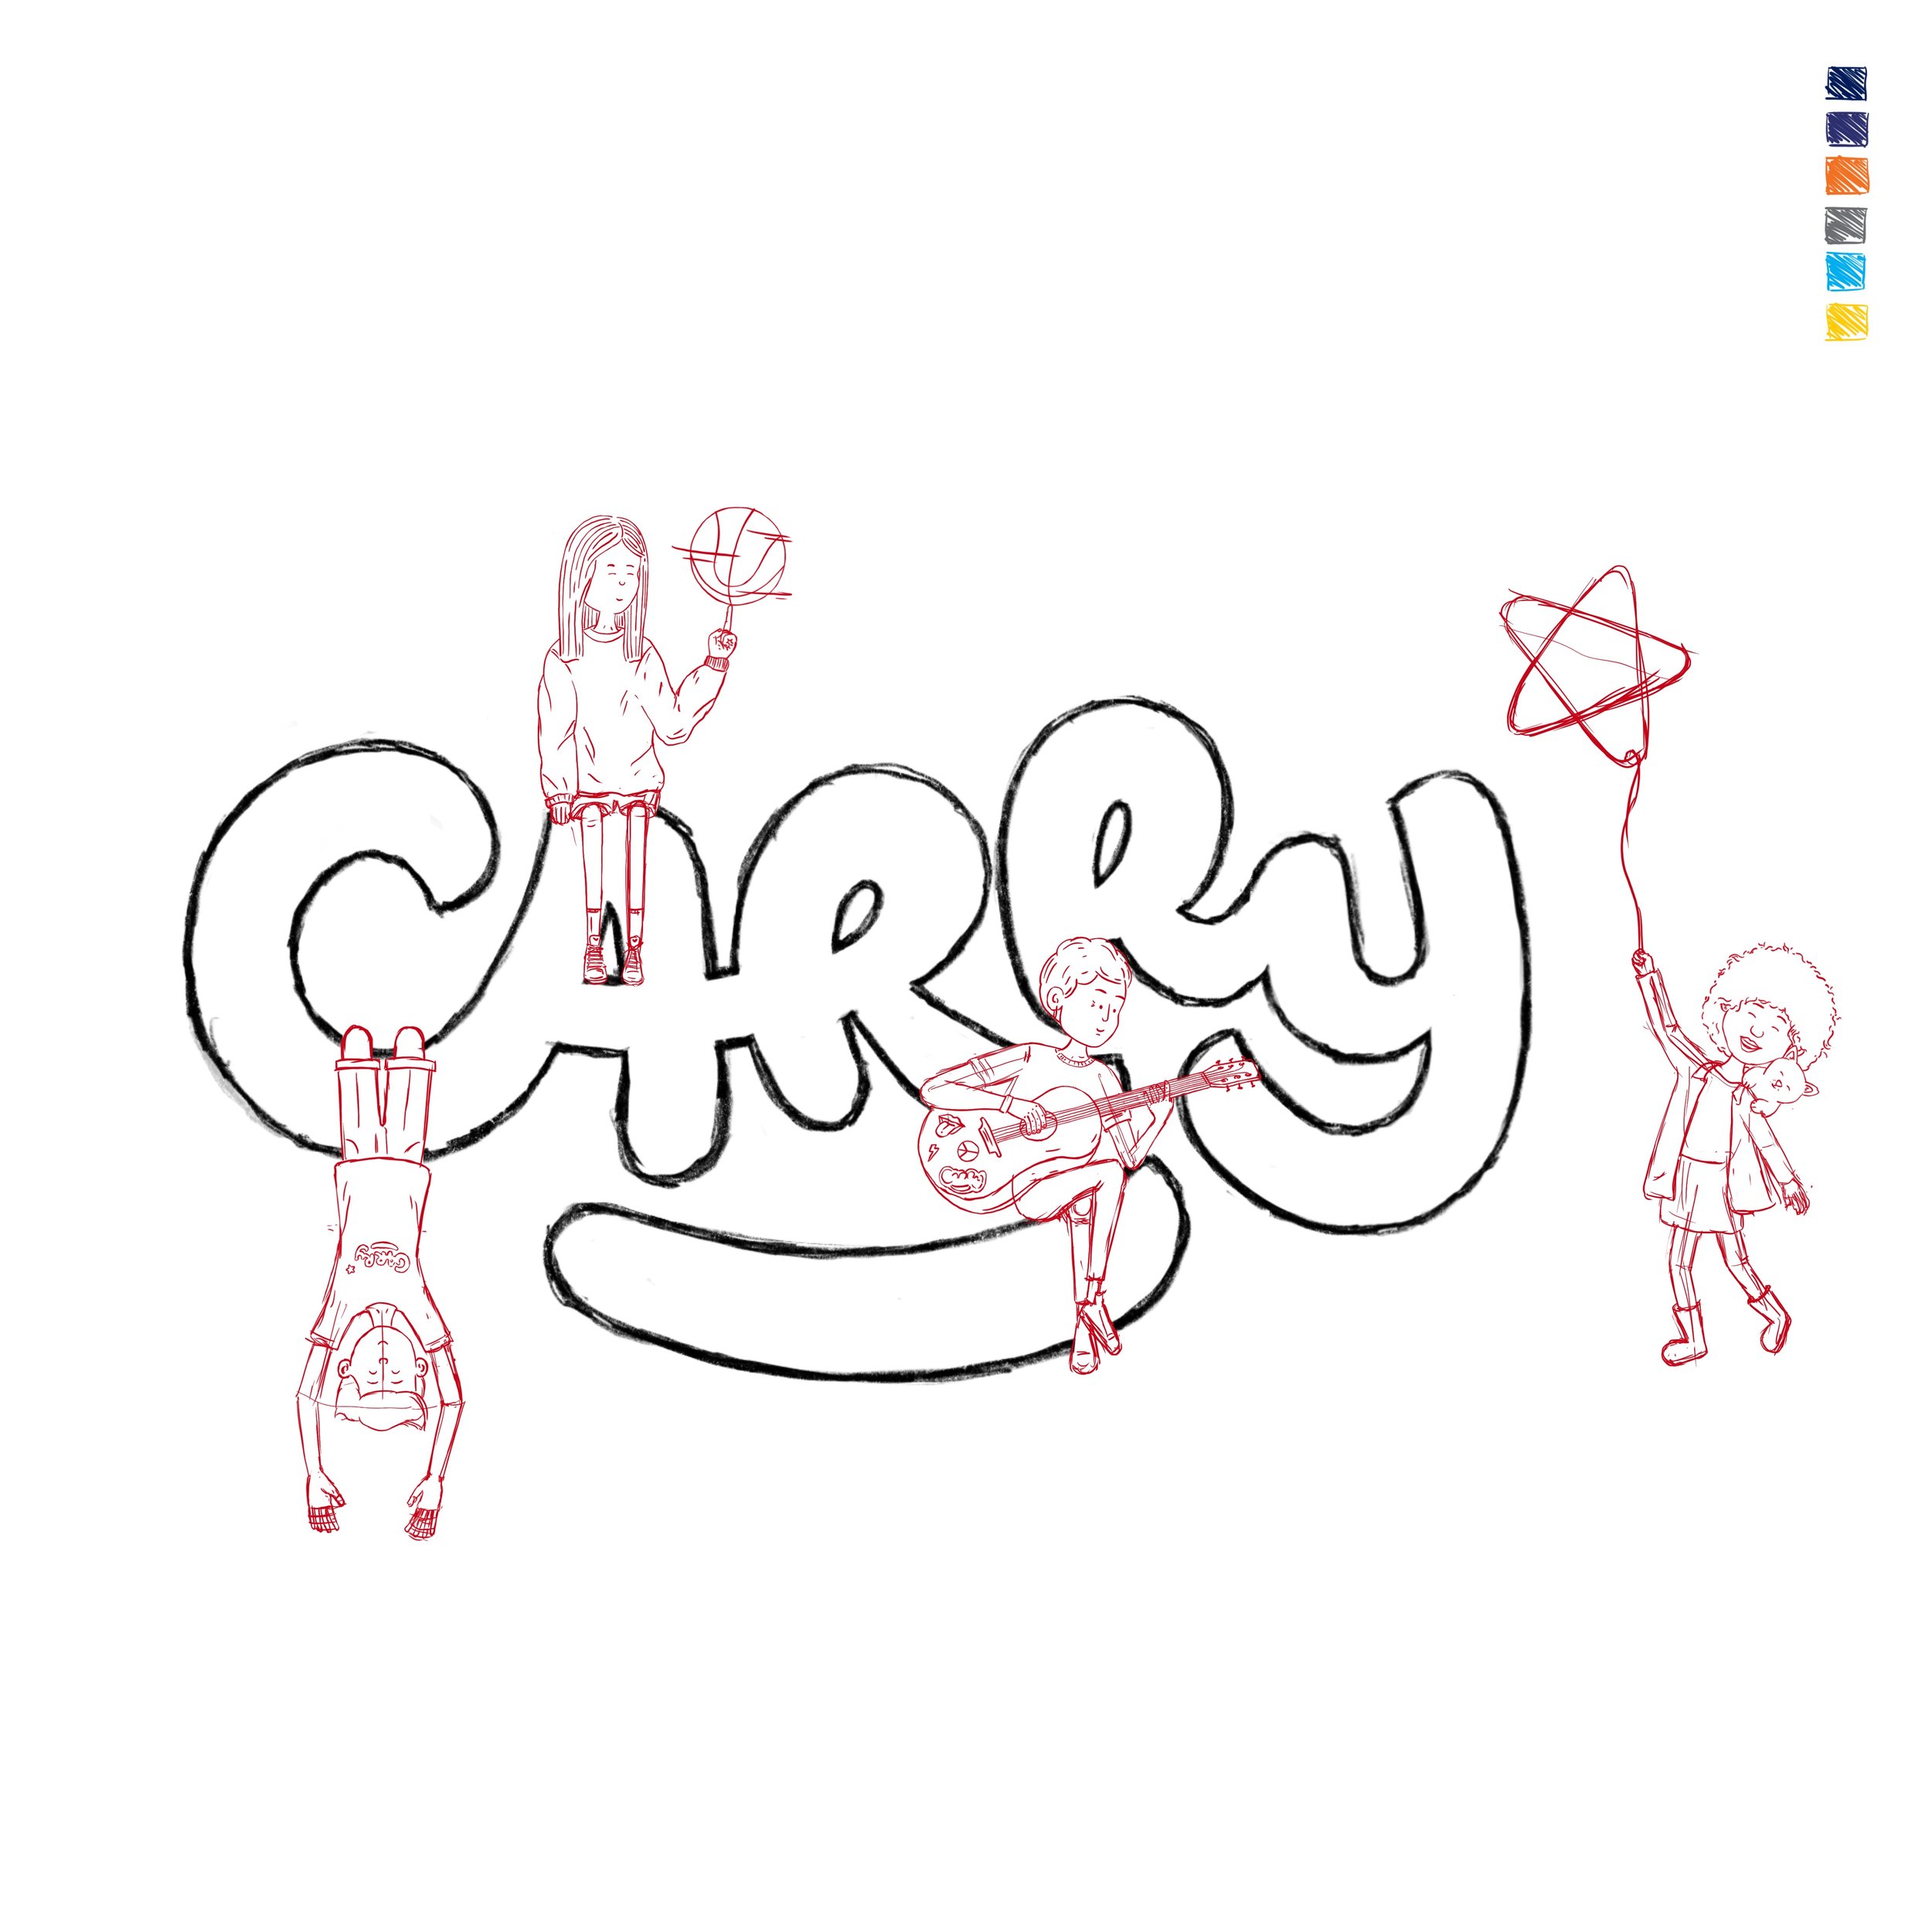 Carry.jpg